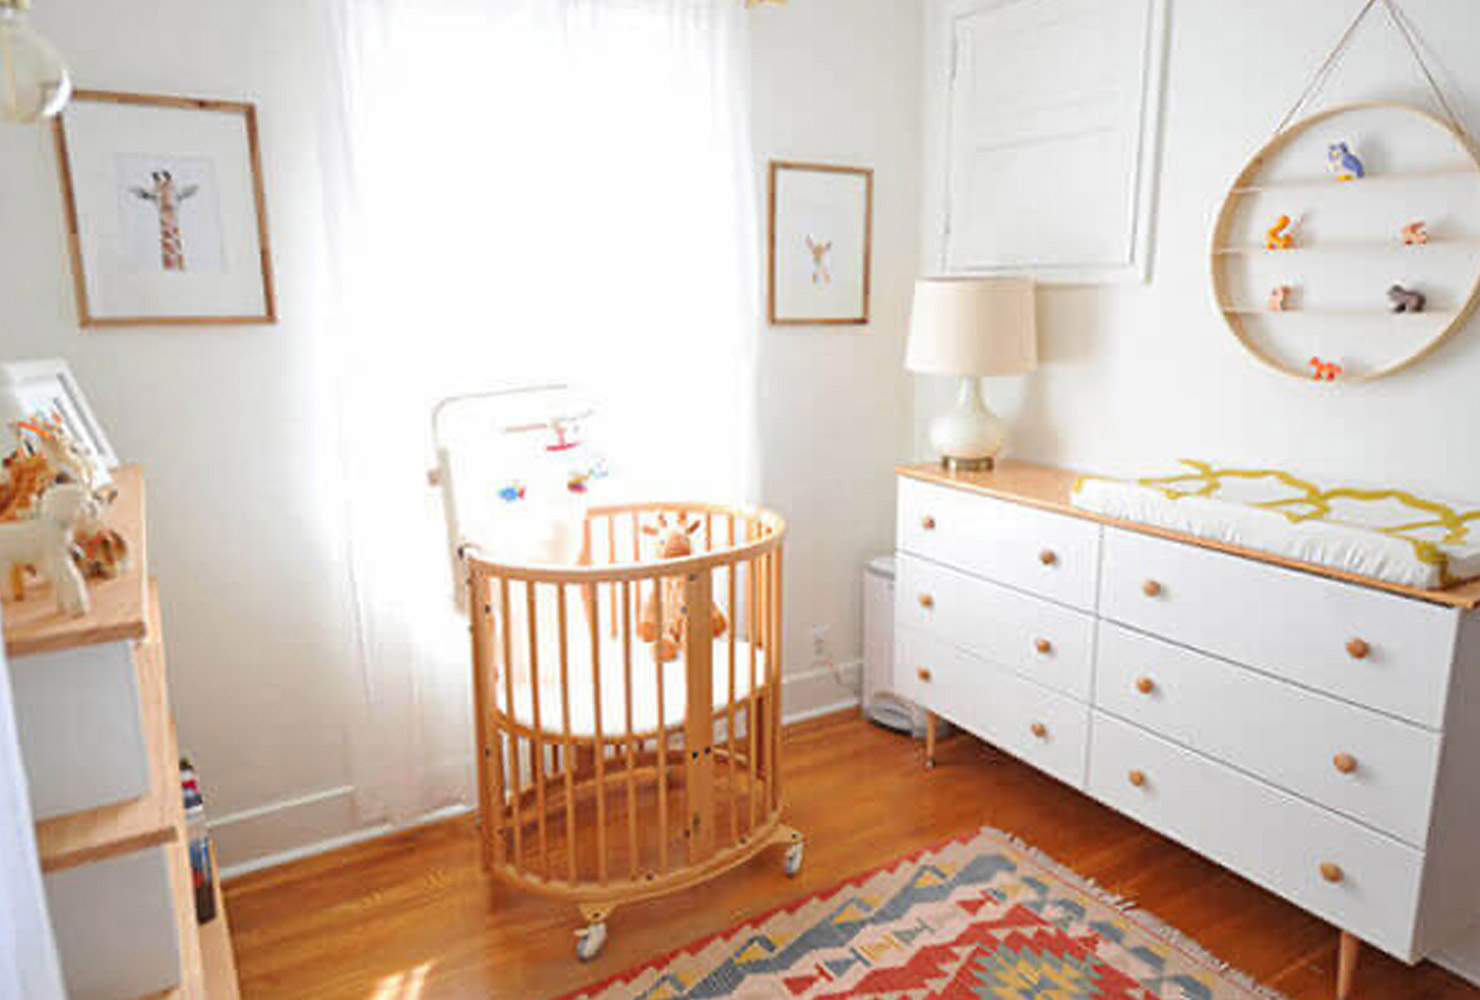 Center crib in baby nursery. 